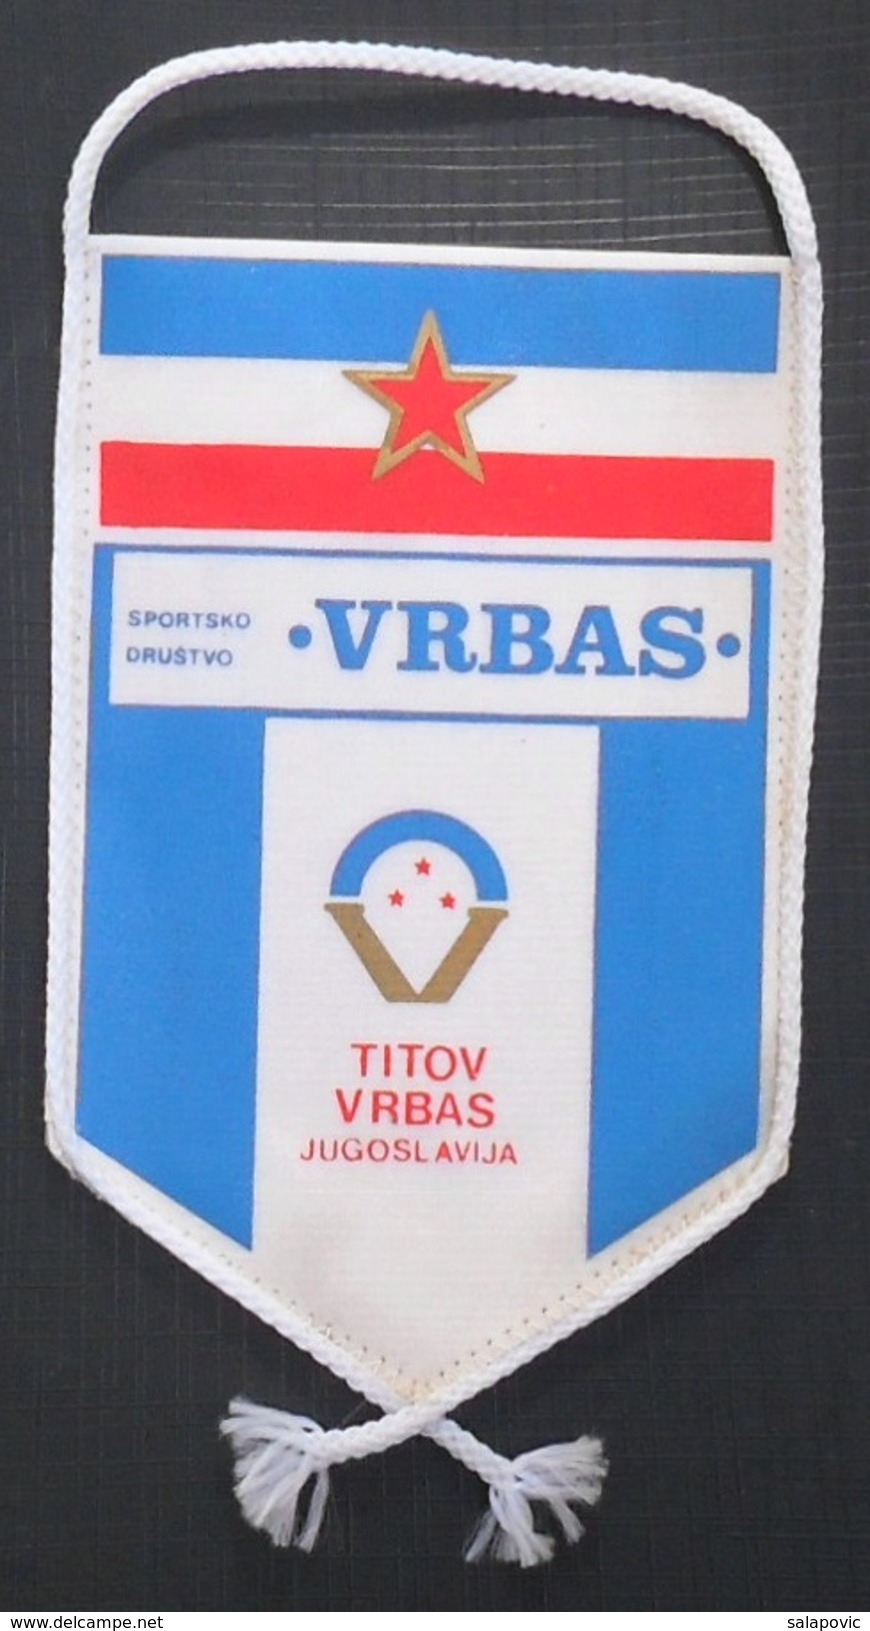 SD VRBAS, TITOV VRBAS, SERBIA FOOTBALL CLUB, CALCIO OLD PENNANT, SPORTS FLAG - Apparel, Souvenirs & Other